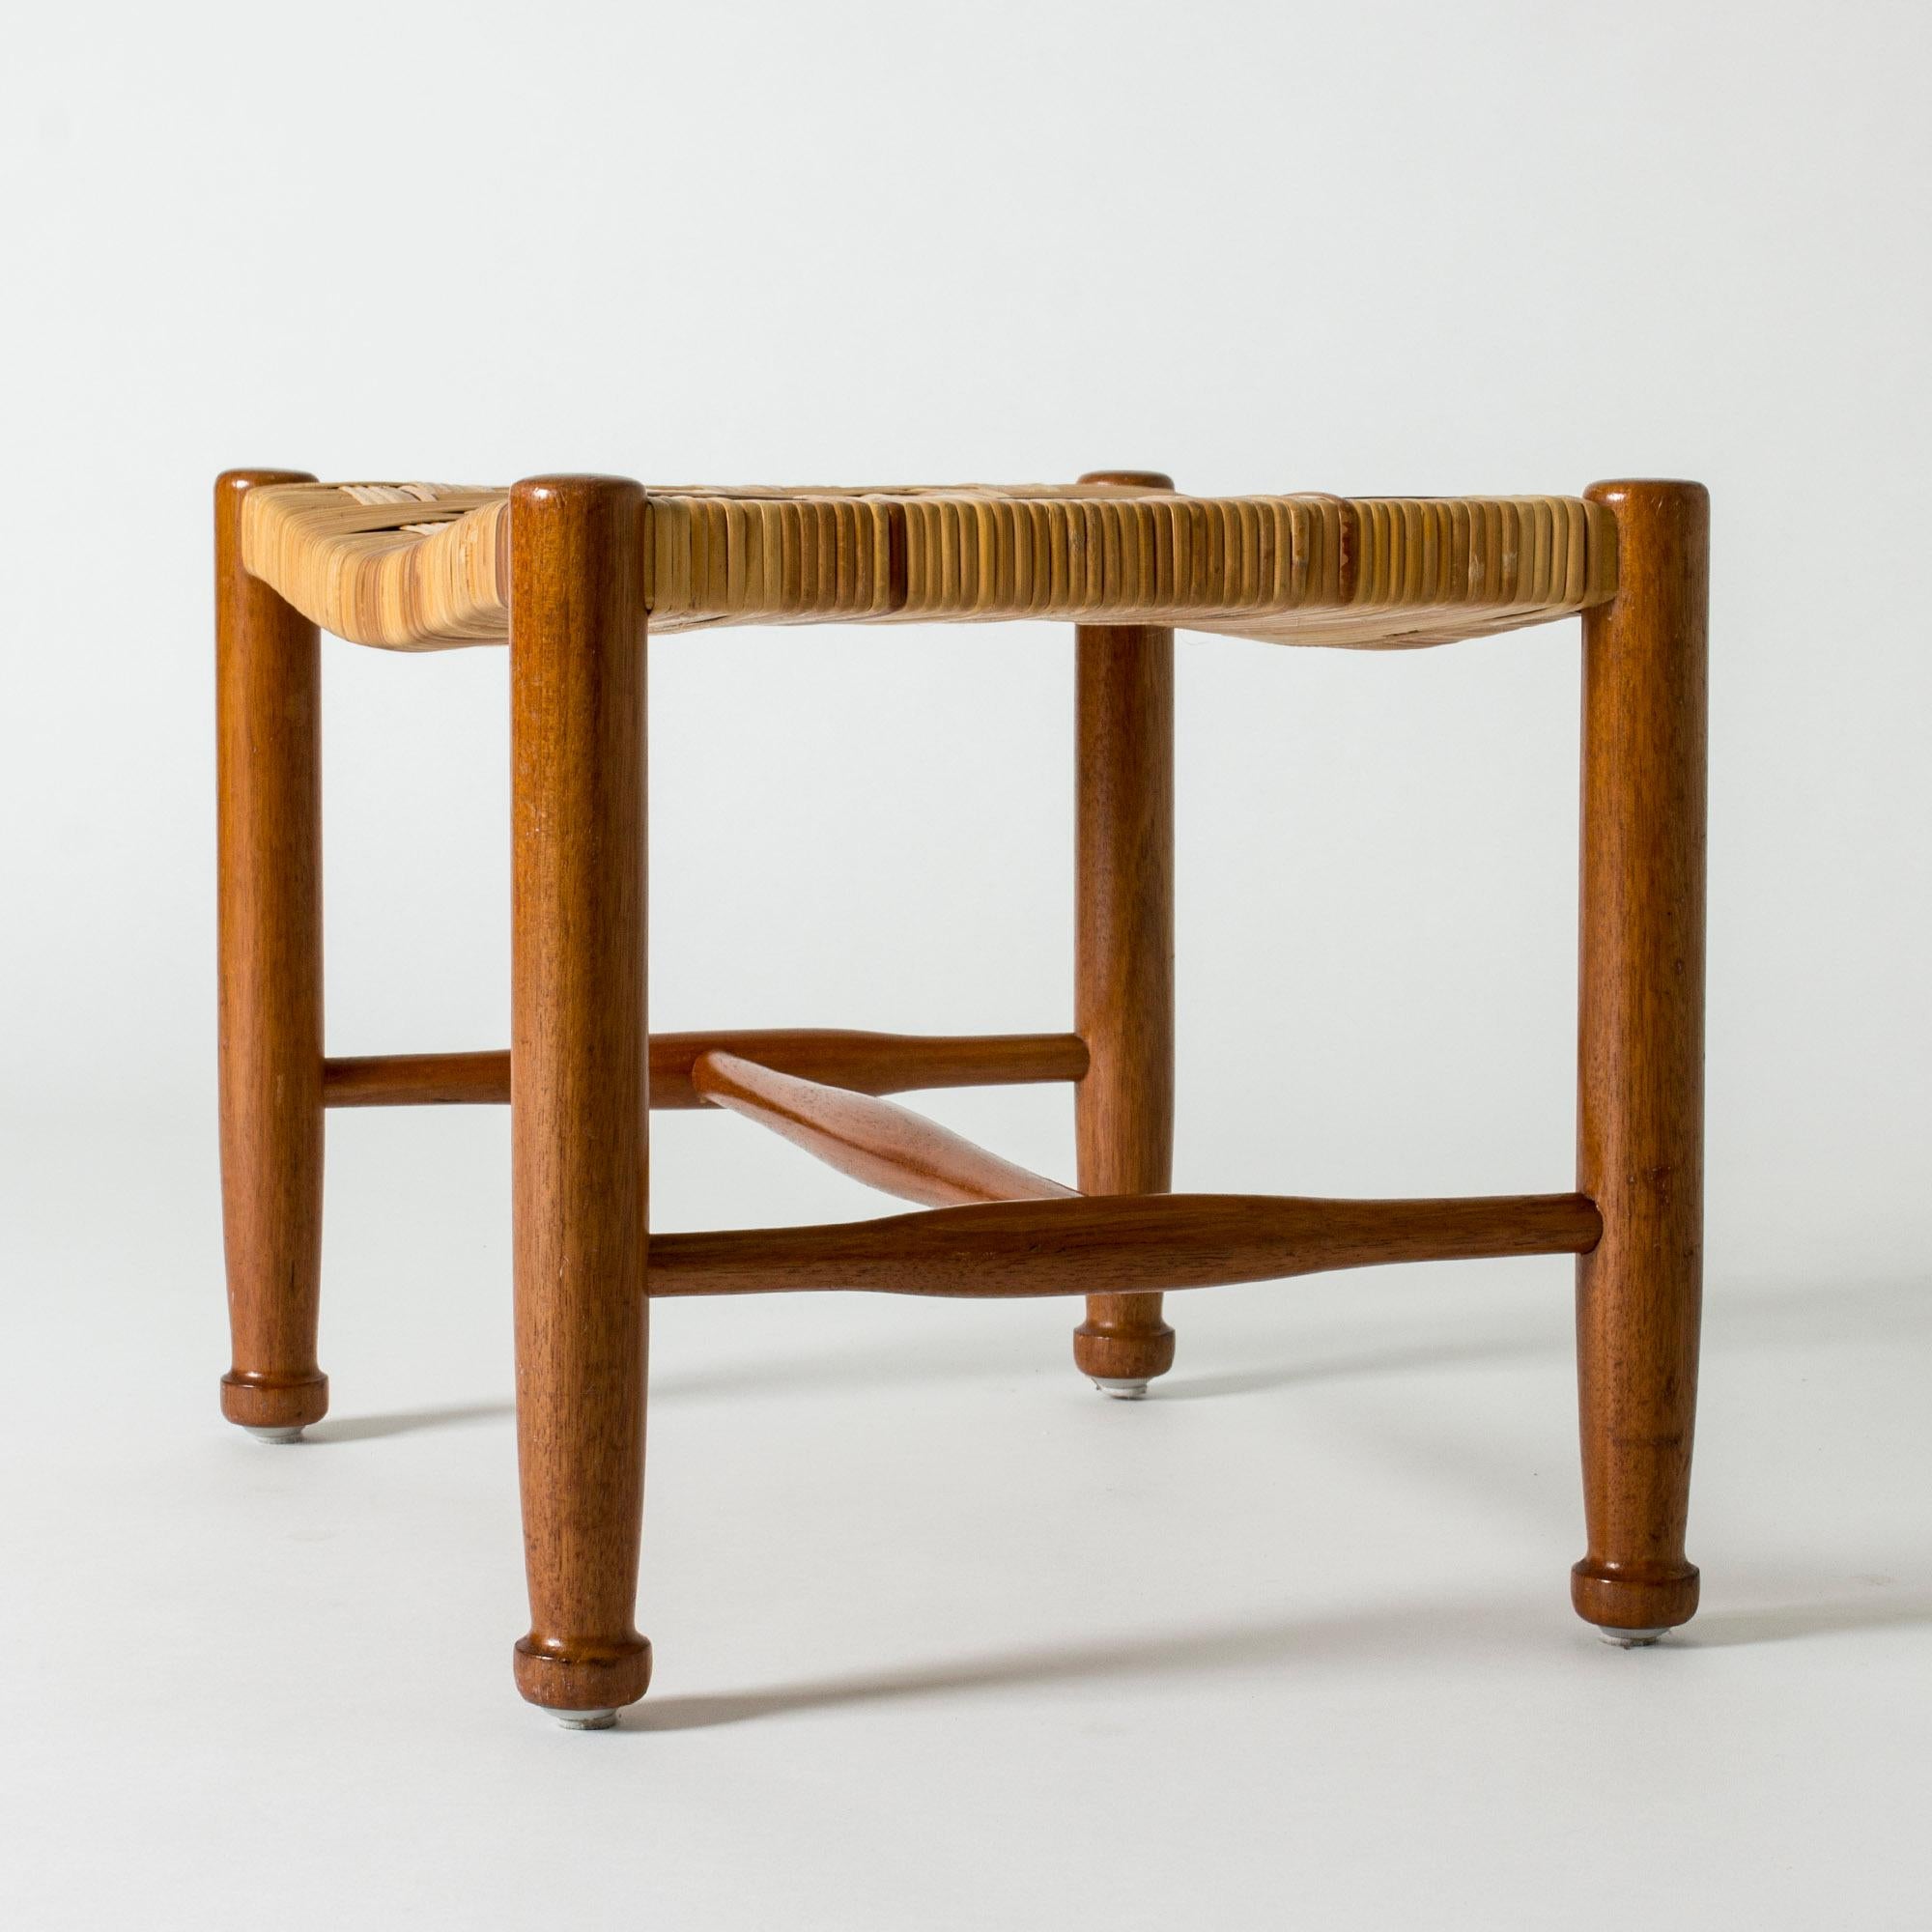 Rattan Midcentury stool by Josef Frank, Svenskt Tenn, Sweden, 1950s